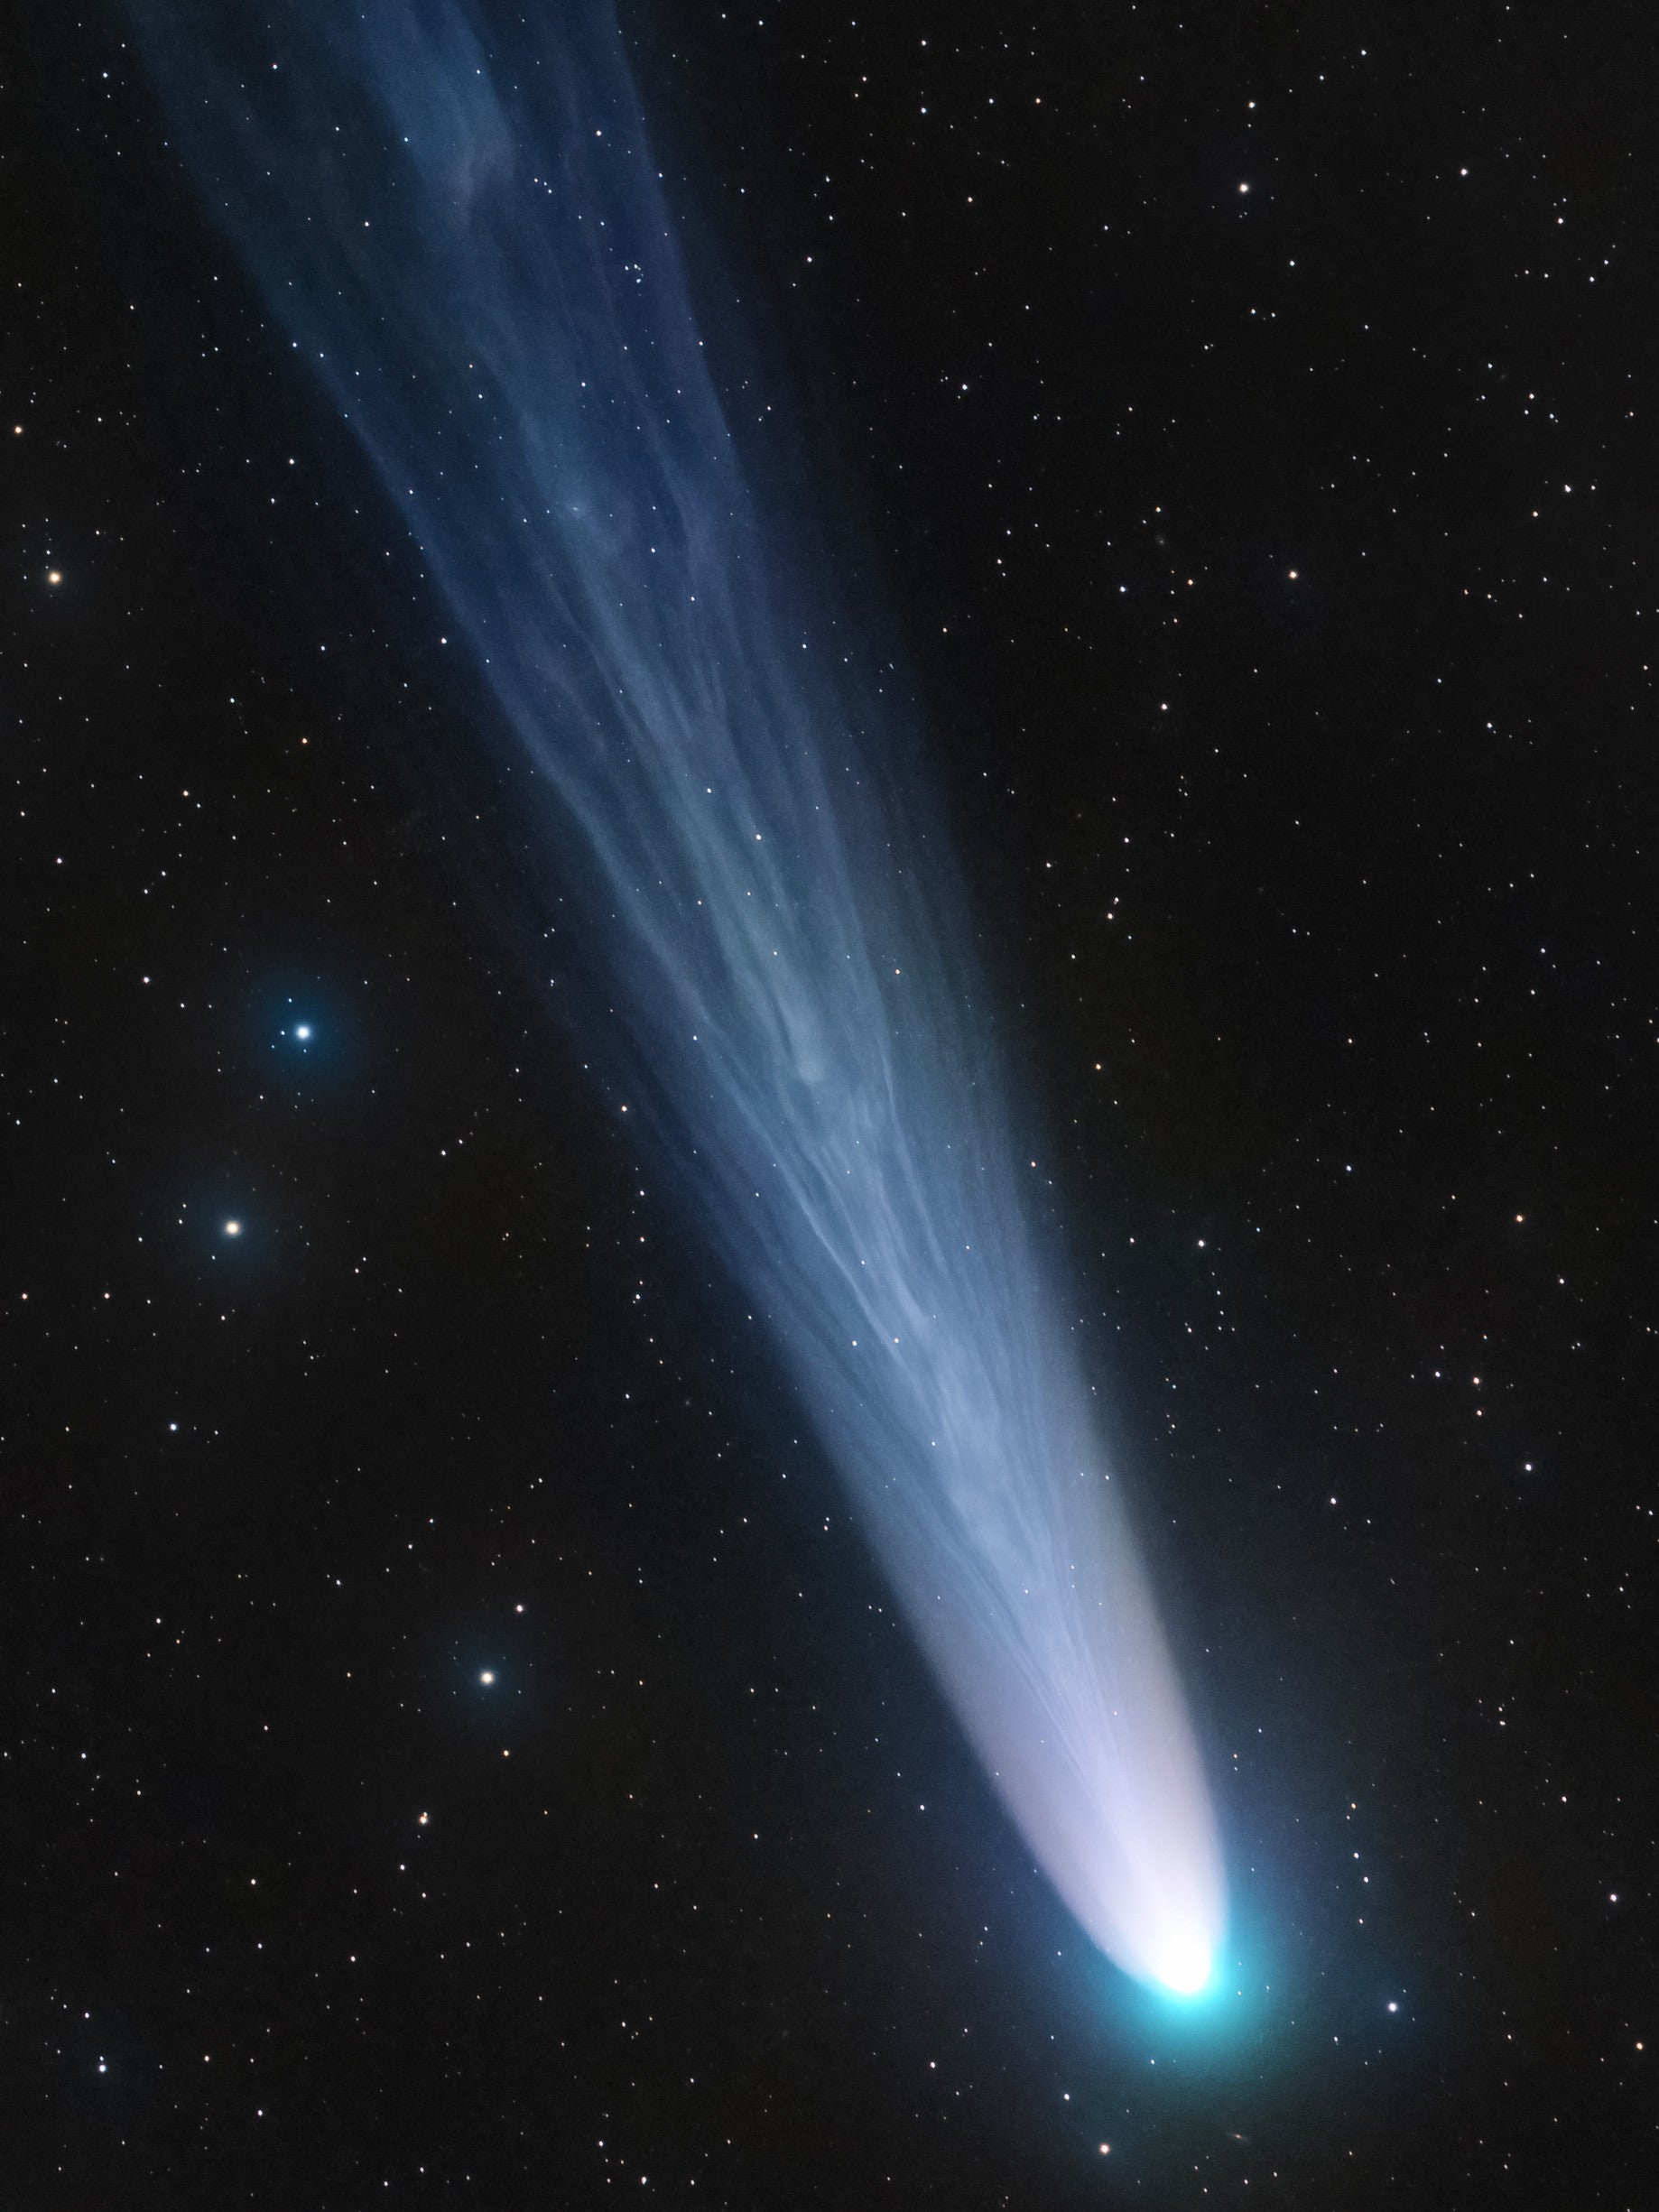 The comet Leonard leaving the Solar System. (Photo: © Lionel Majzik)